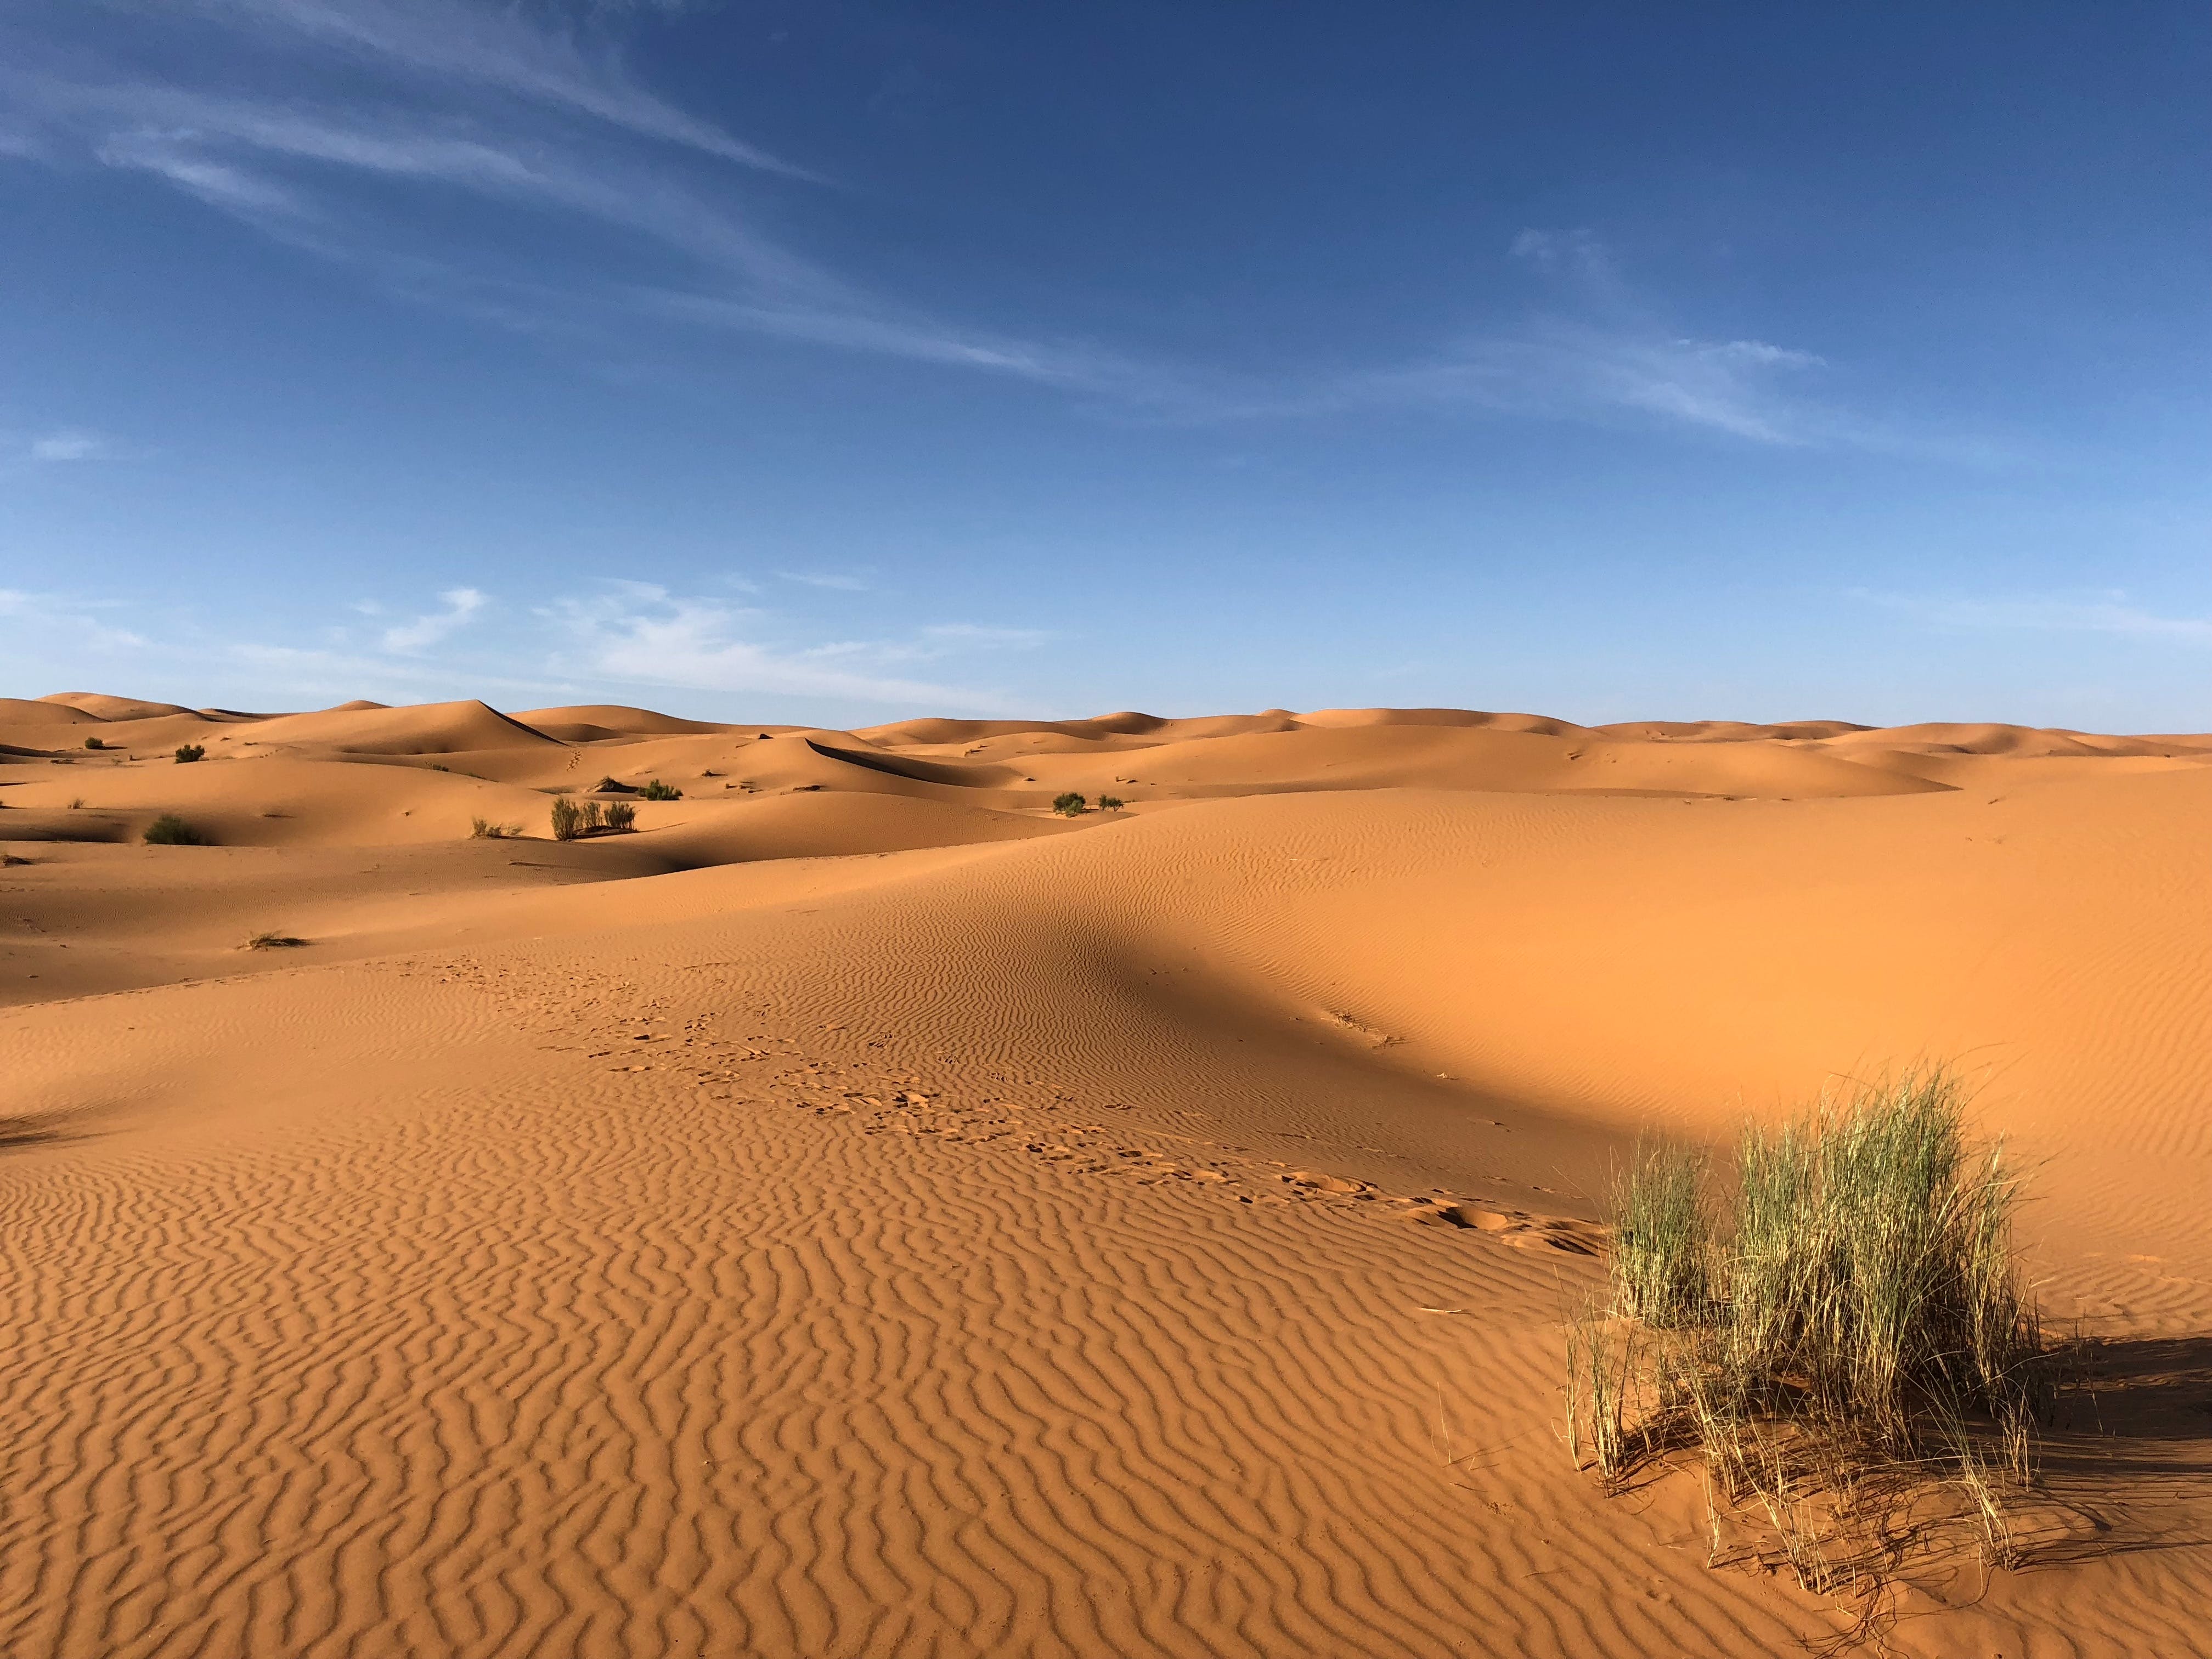 Sahara Circular Gardens Stop Desertification, Provide Food Security